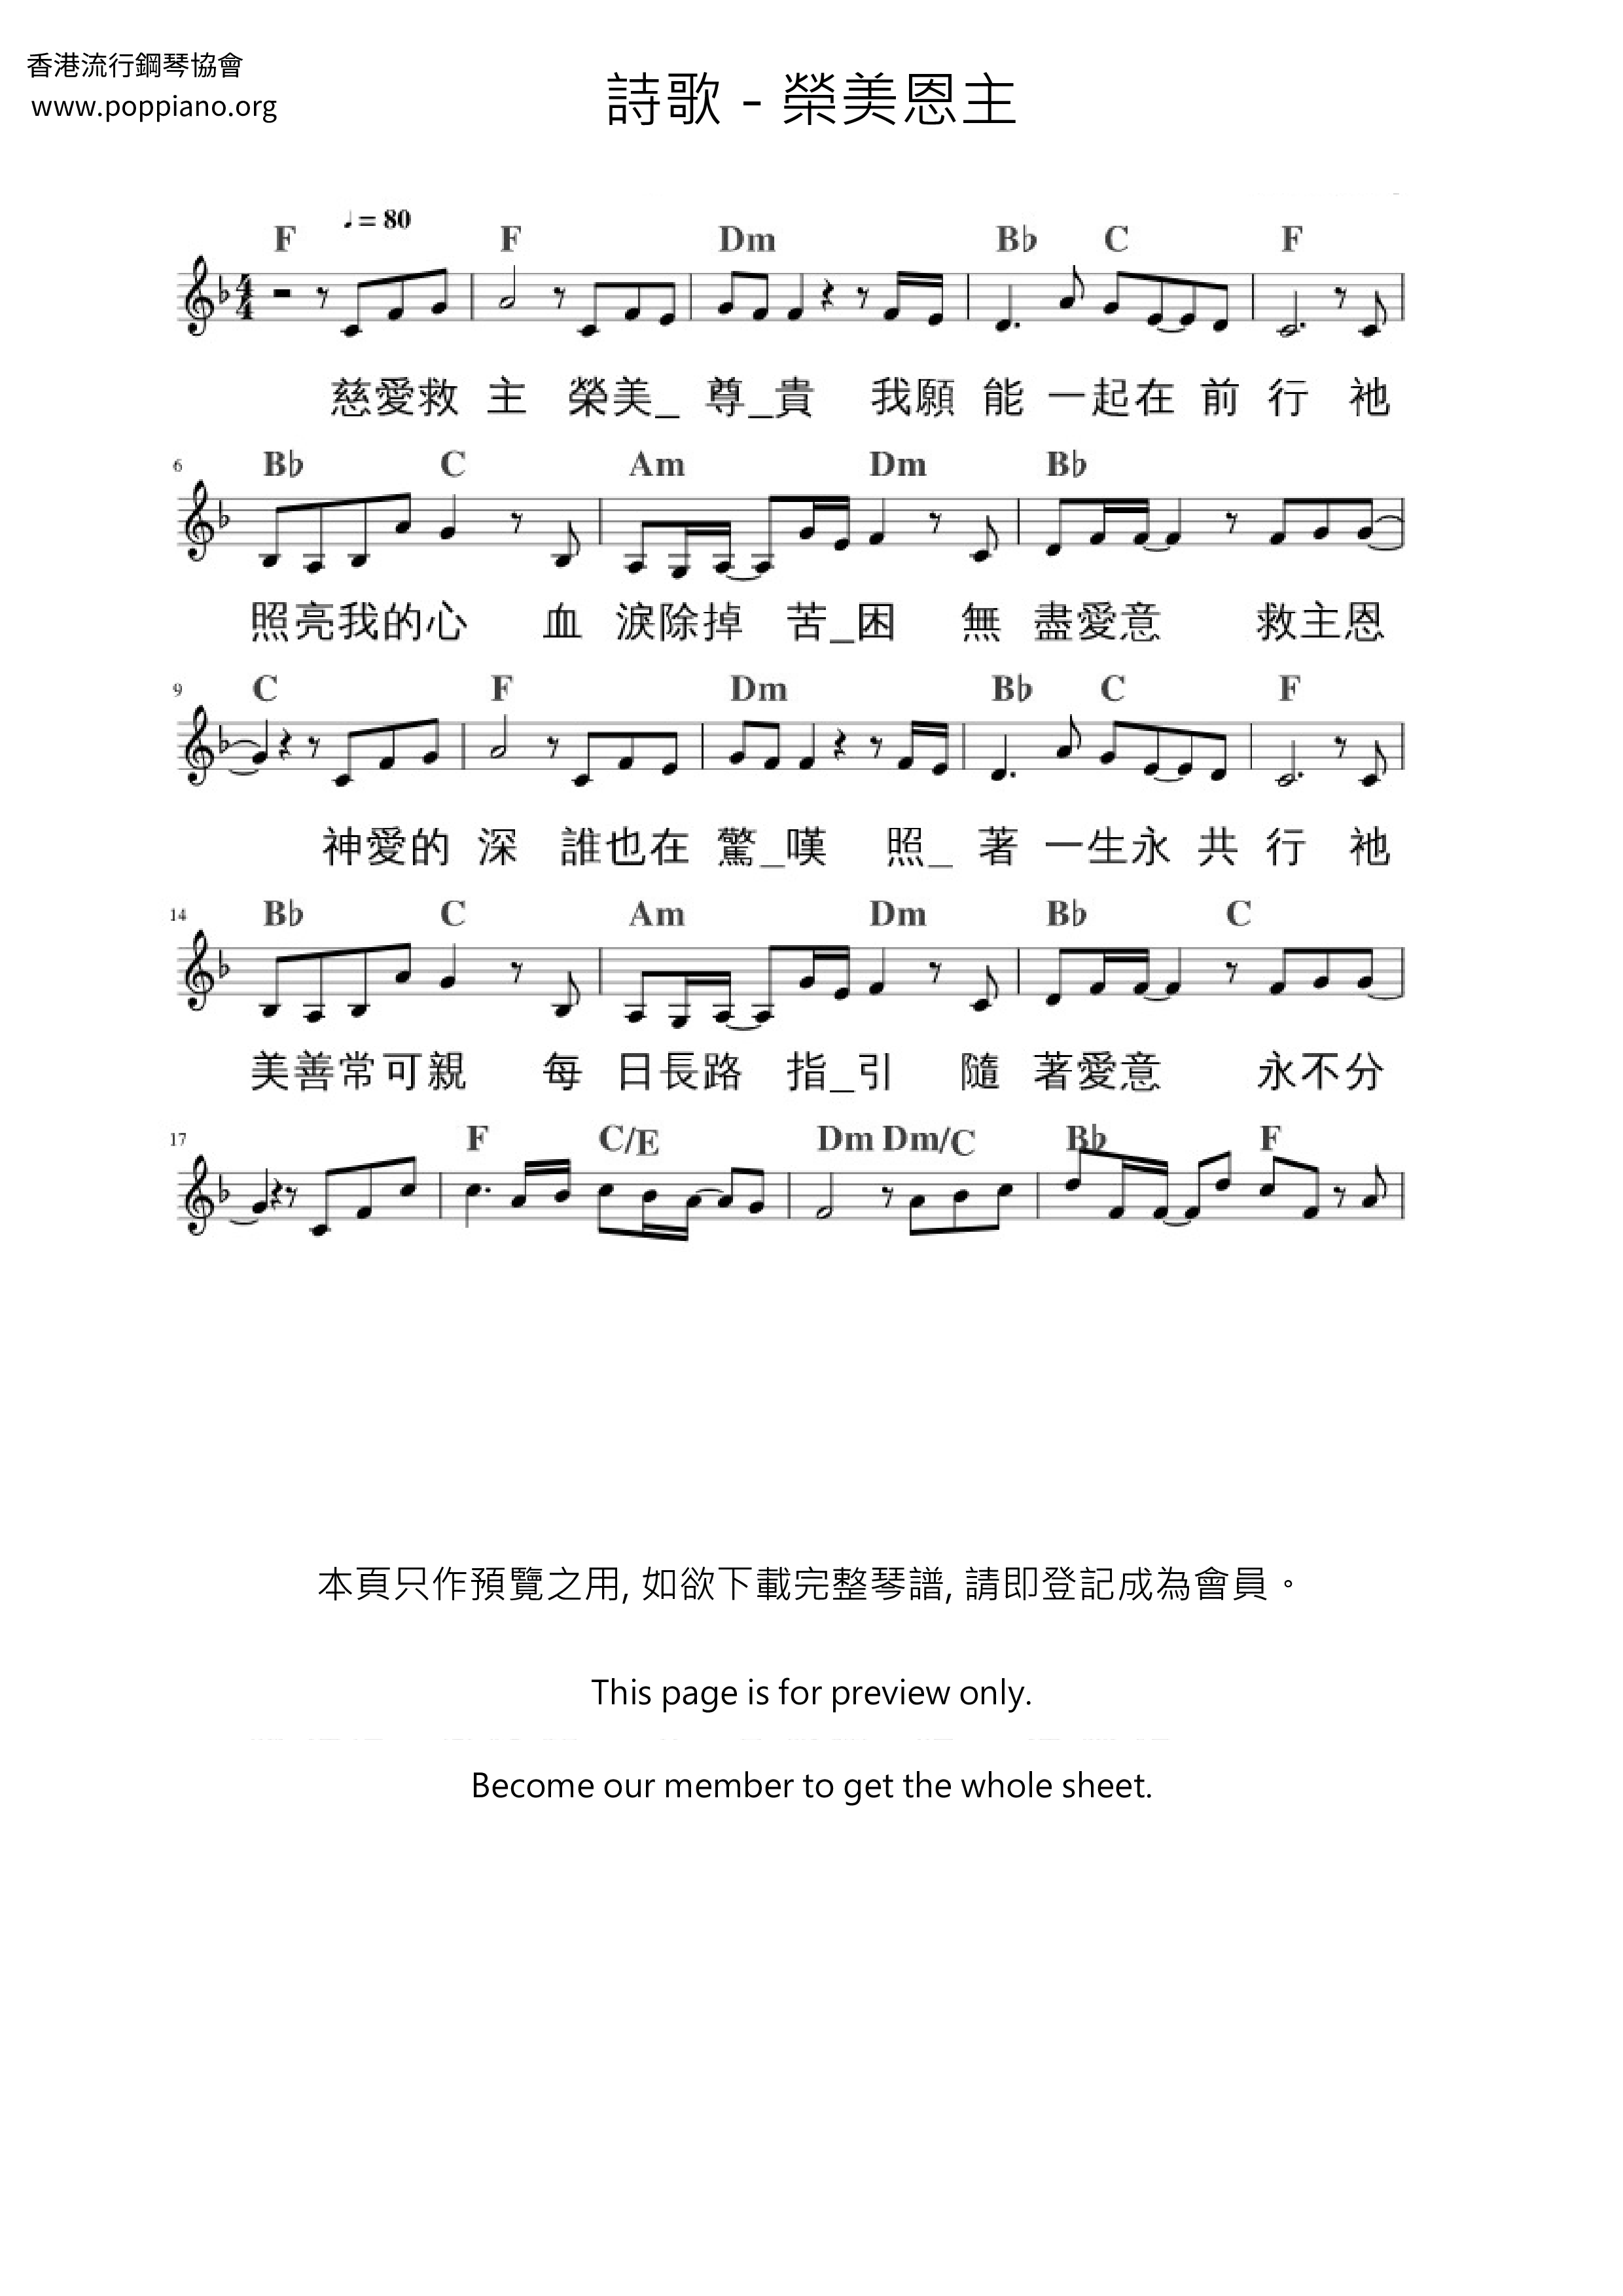 Rongmei Enzhu Score